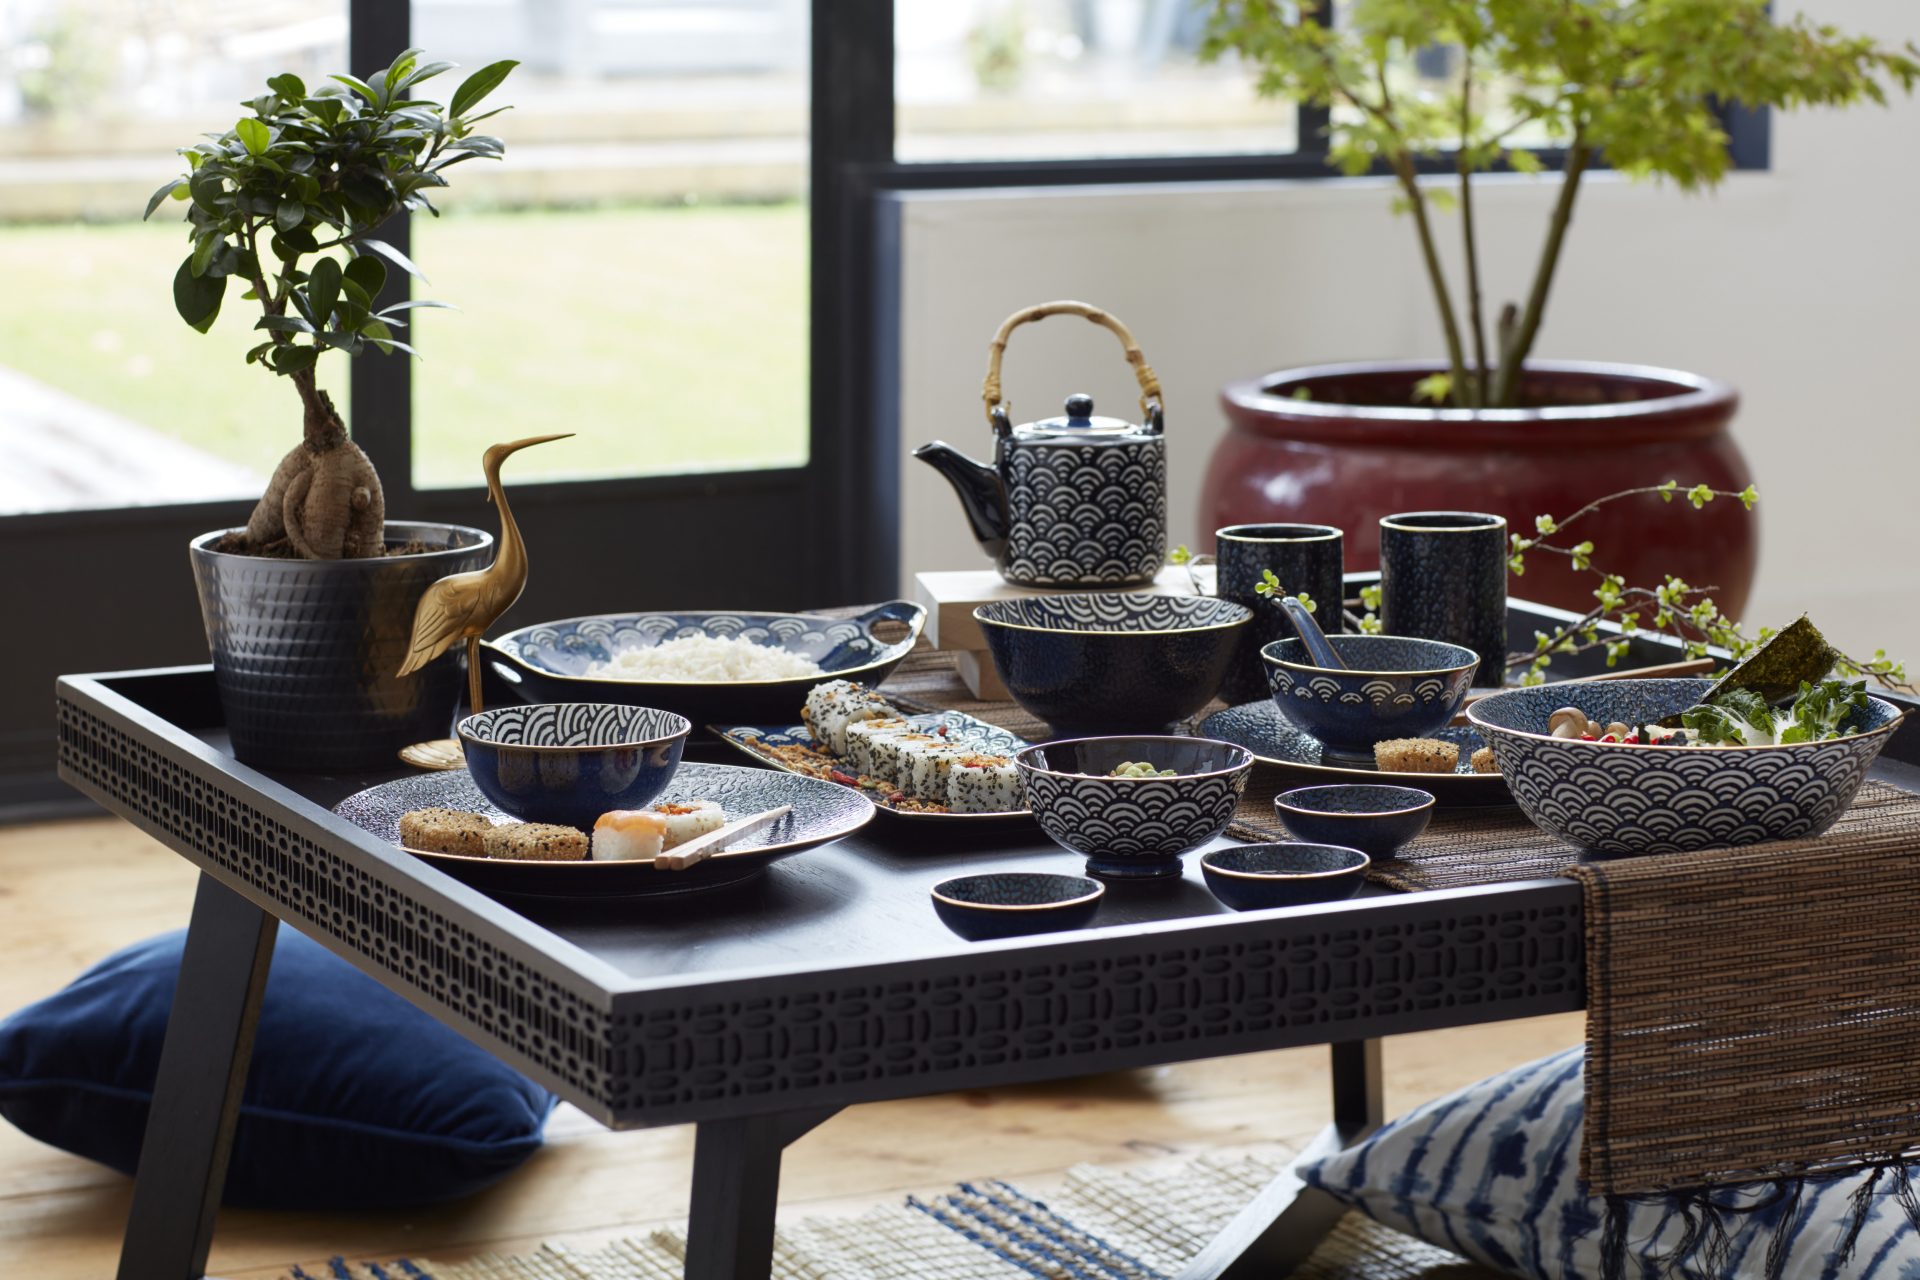 Buy London Pottery ceramic teapots & mugs online